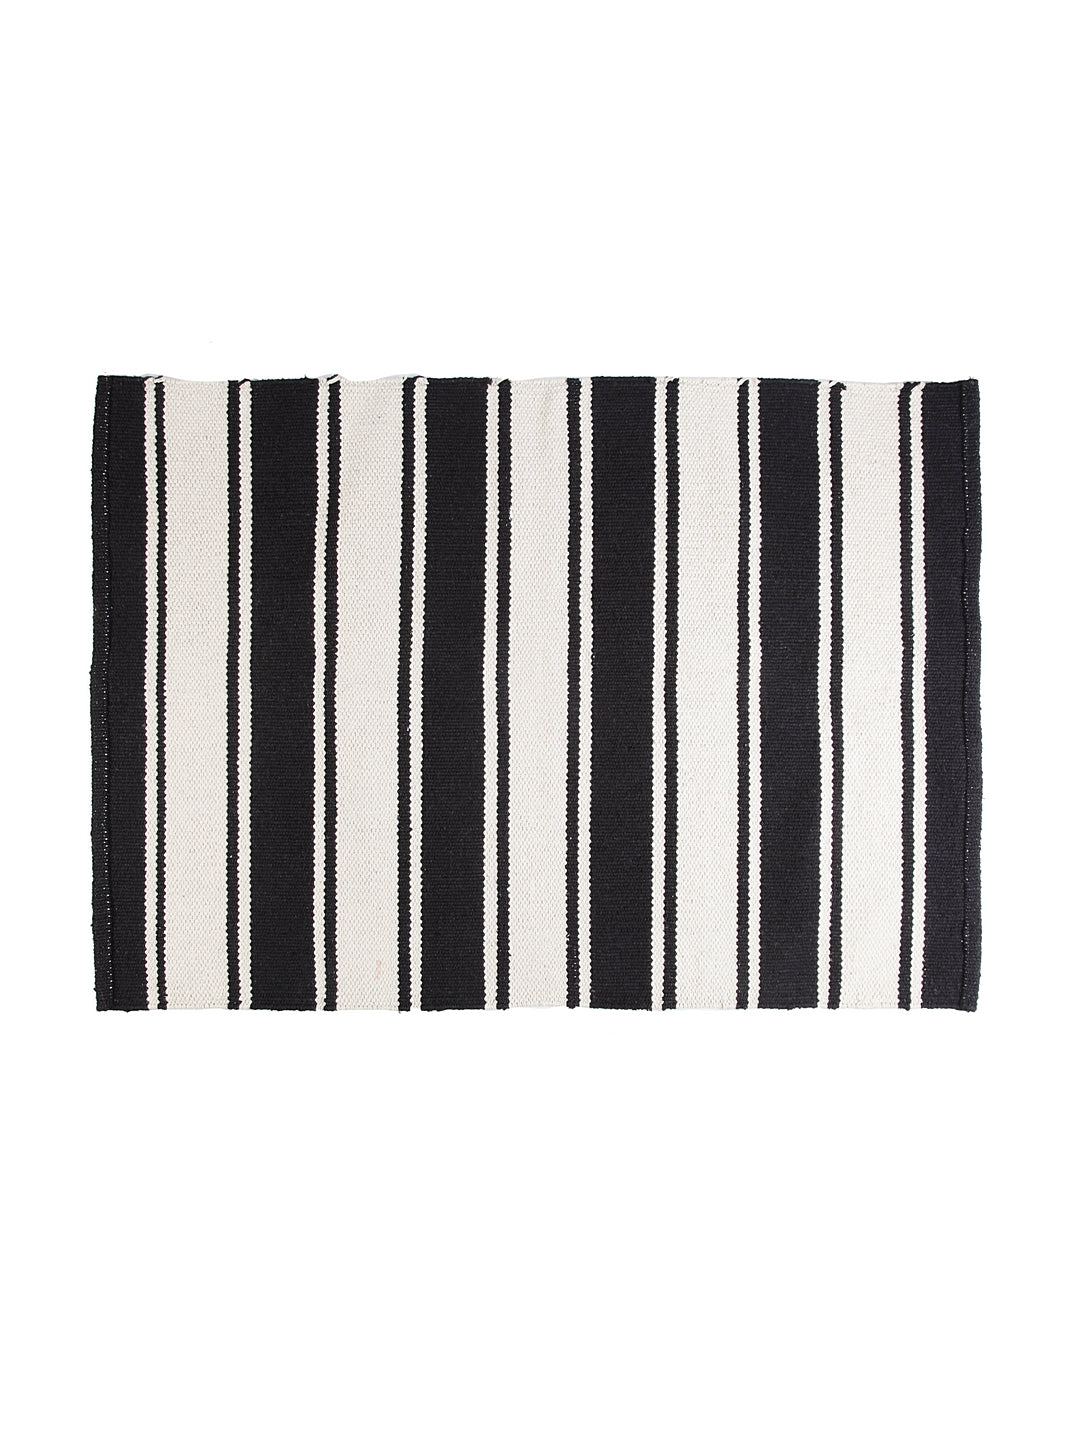 Blanc9 Woven Striped Rug